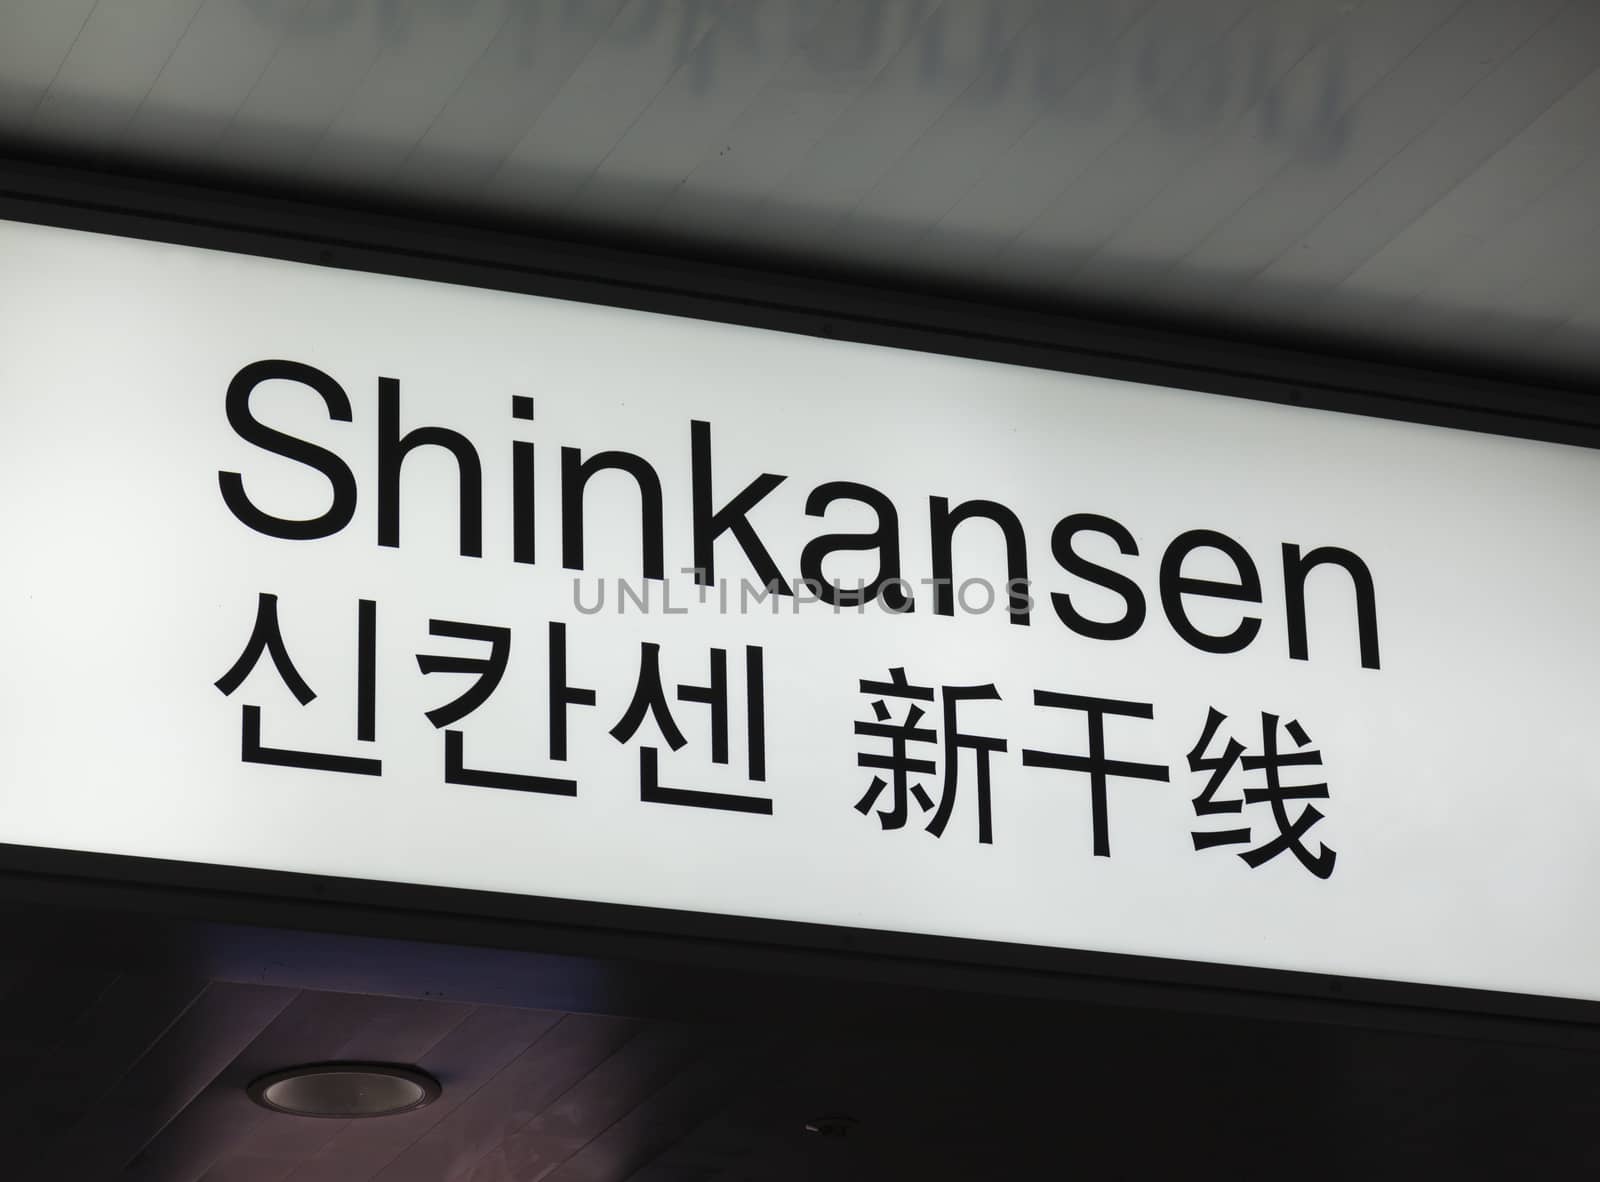 Shinkansen bullet train sign in a train station in Japan by ymgerman